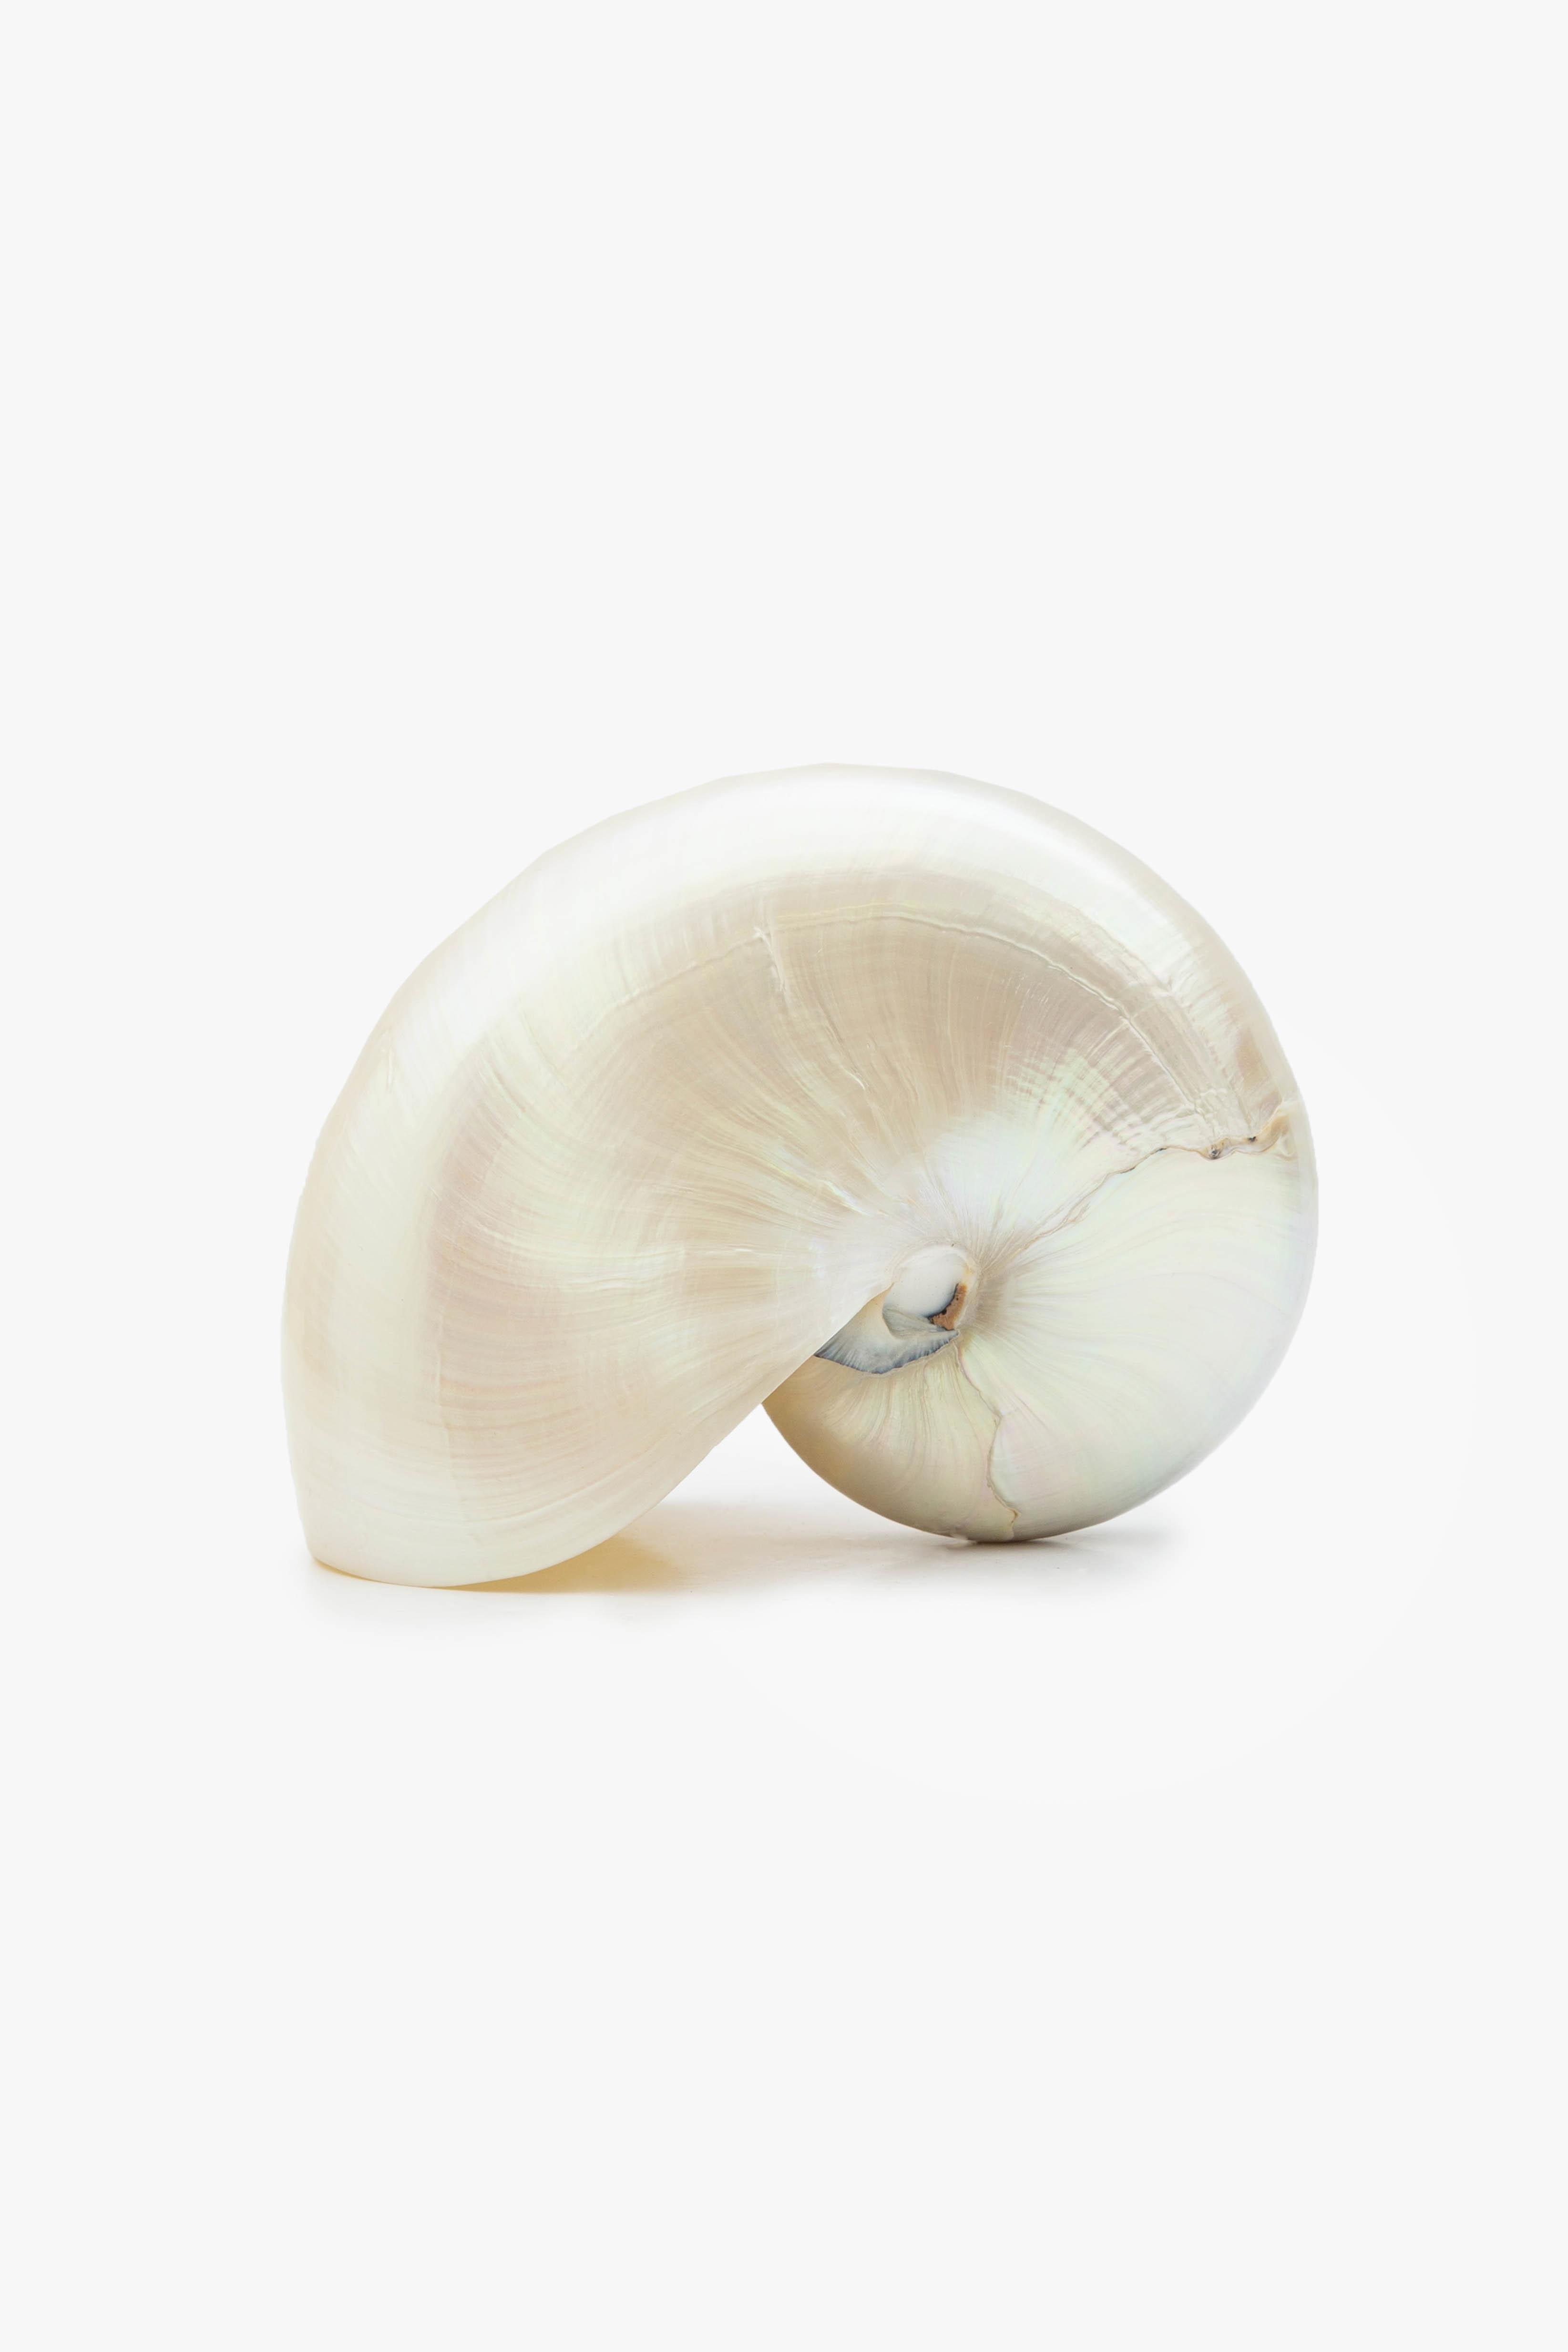 seashell, shell, luxury accessories, aura london, aura